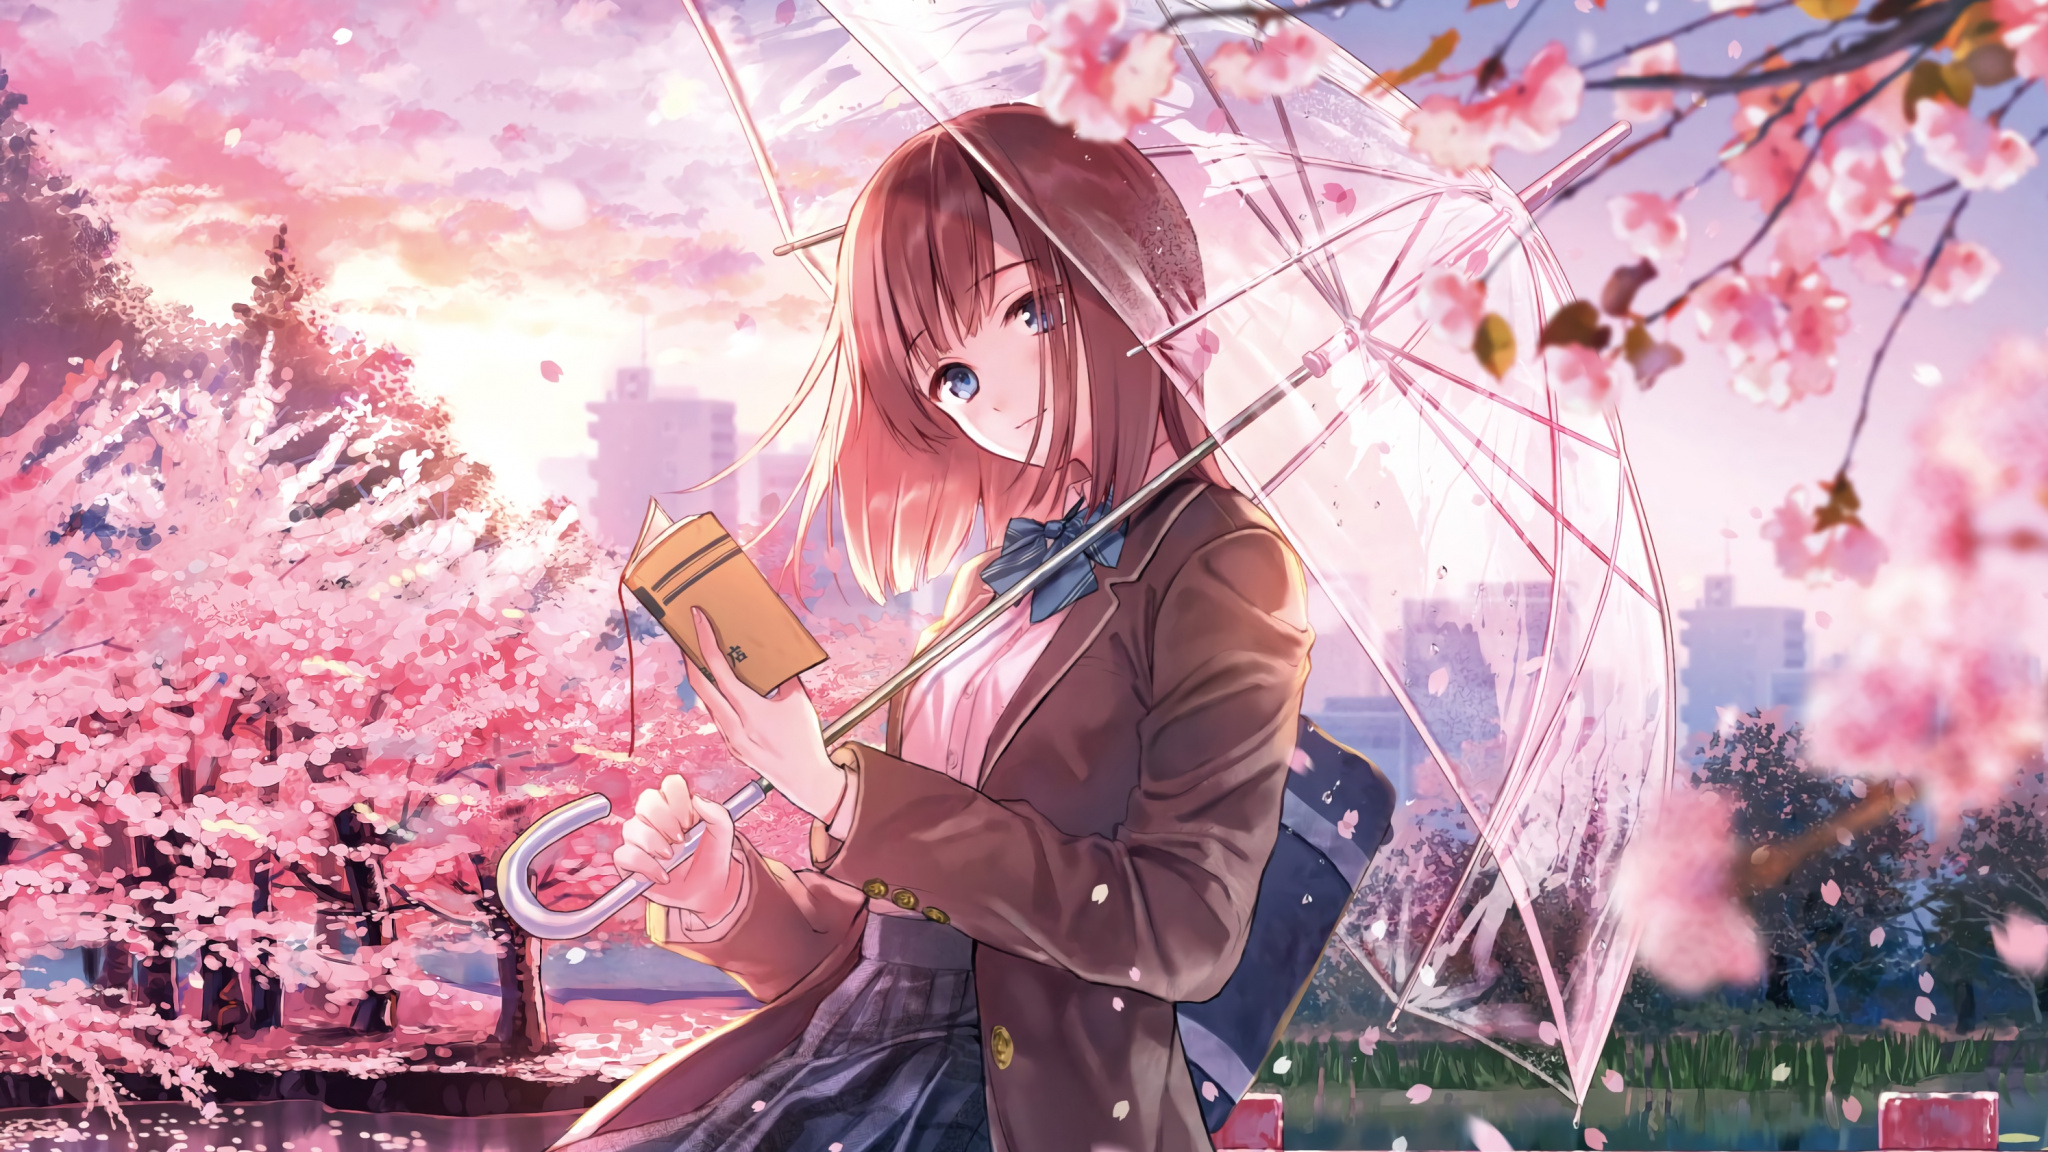 Download Blossom, anime girl, beautiful wallpaper, 2048x Dual Wide, Widescreen